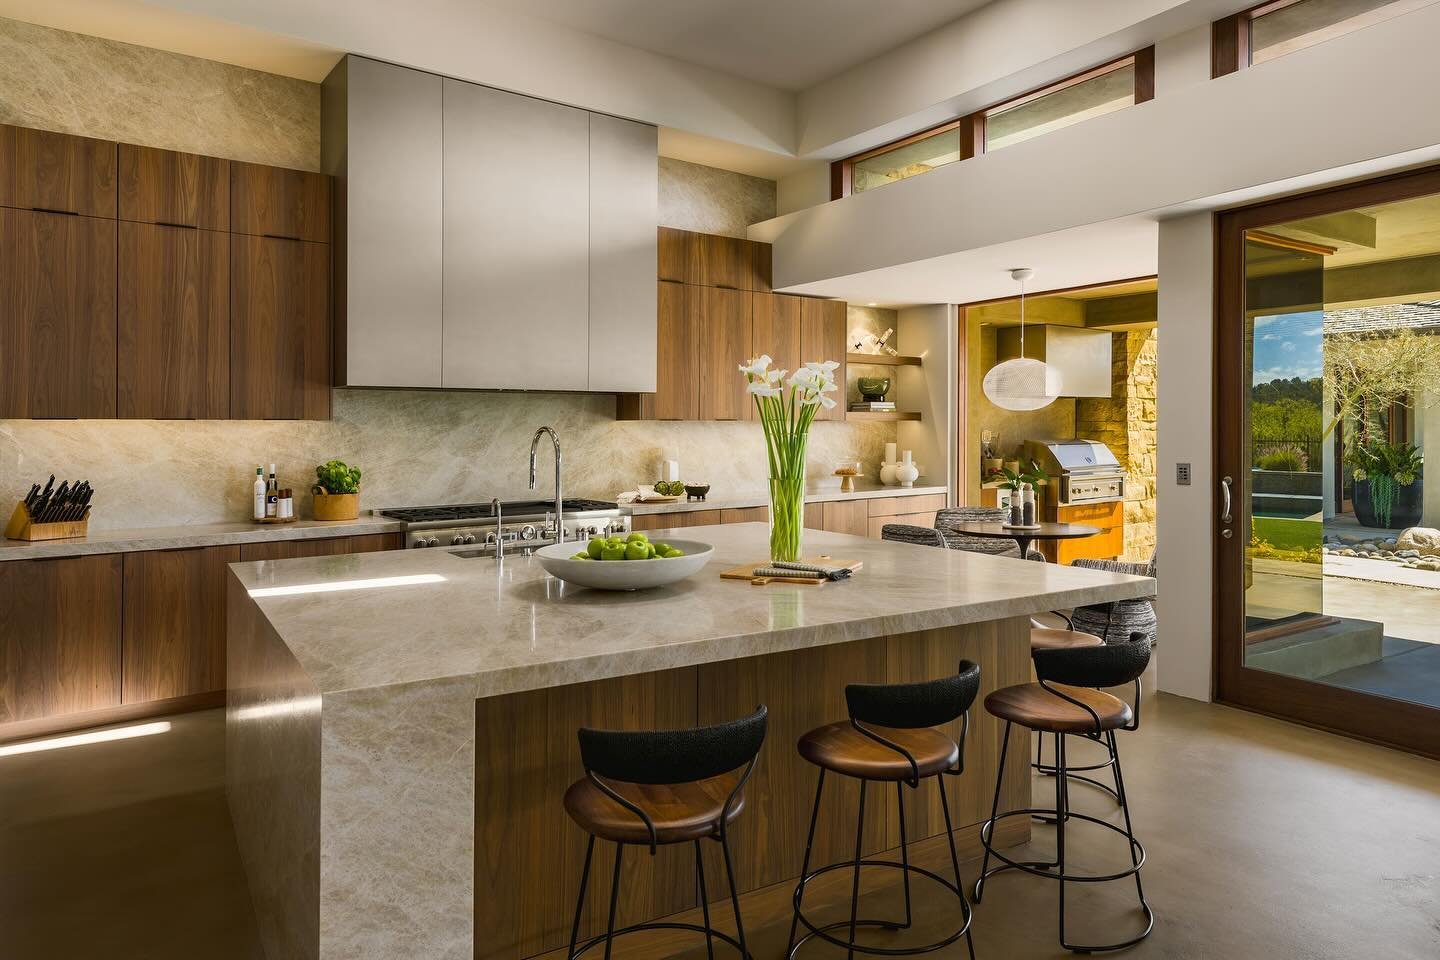 New project photos of a beautiful indoor/outdoor kitchen for @cindybdesign 
.
.
.
#luxurydining #luxuryinteriordesign #kitchenremodel #delmarhomes #interiordesign #sandiegorealestate #luxuryhome #milliondollarlisting #indooroutdoordining